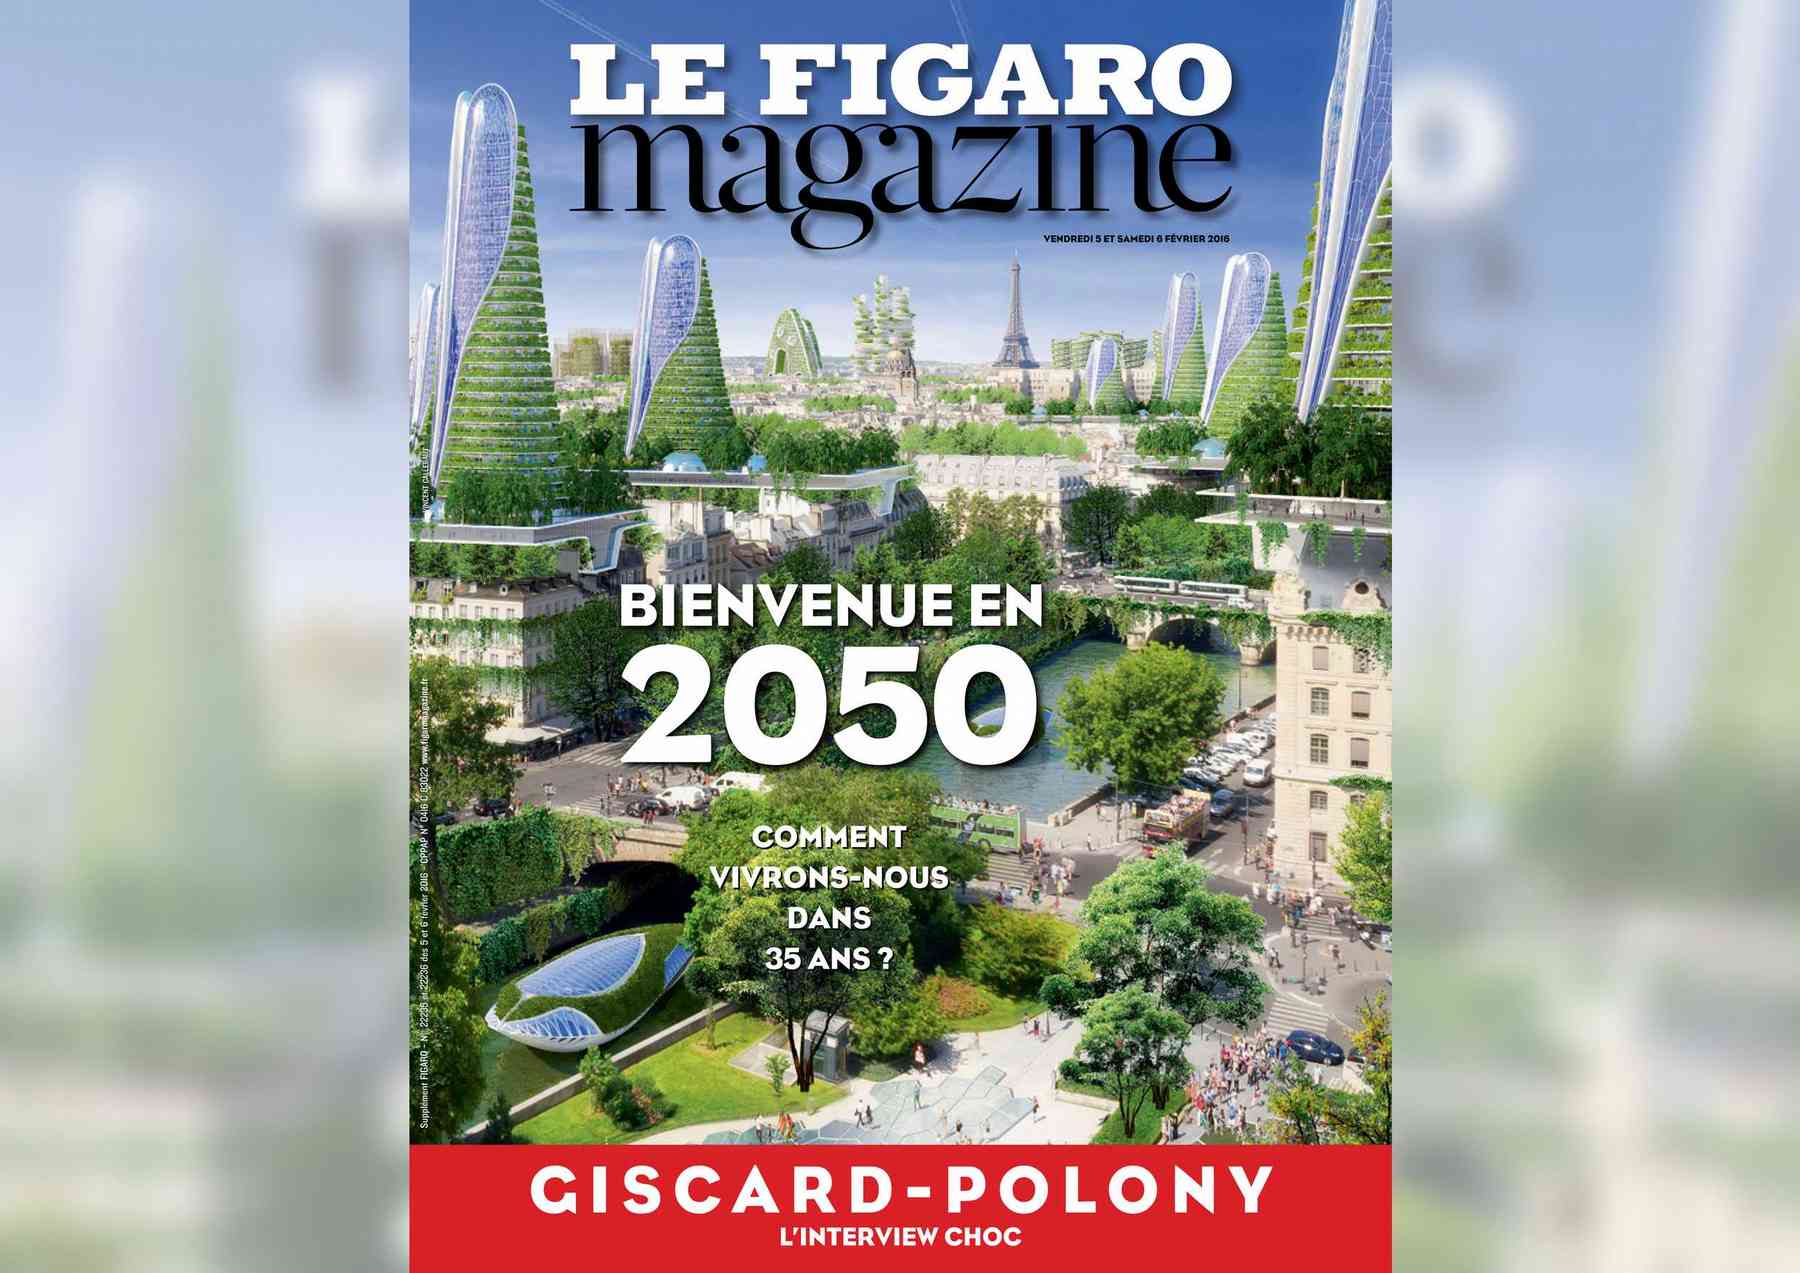 160206_figaromagazine-figaromagazine_pl001